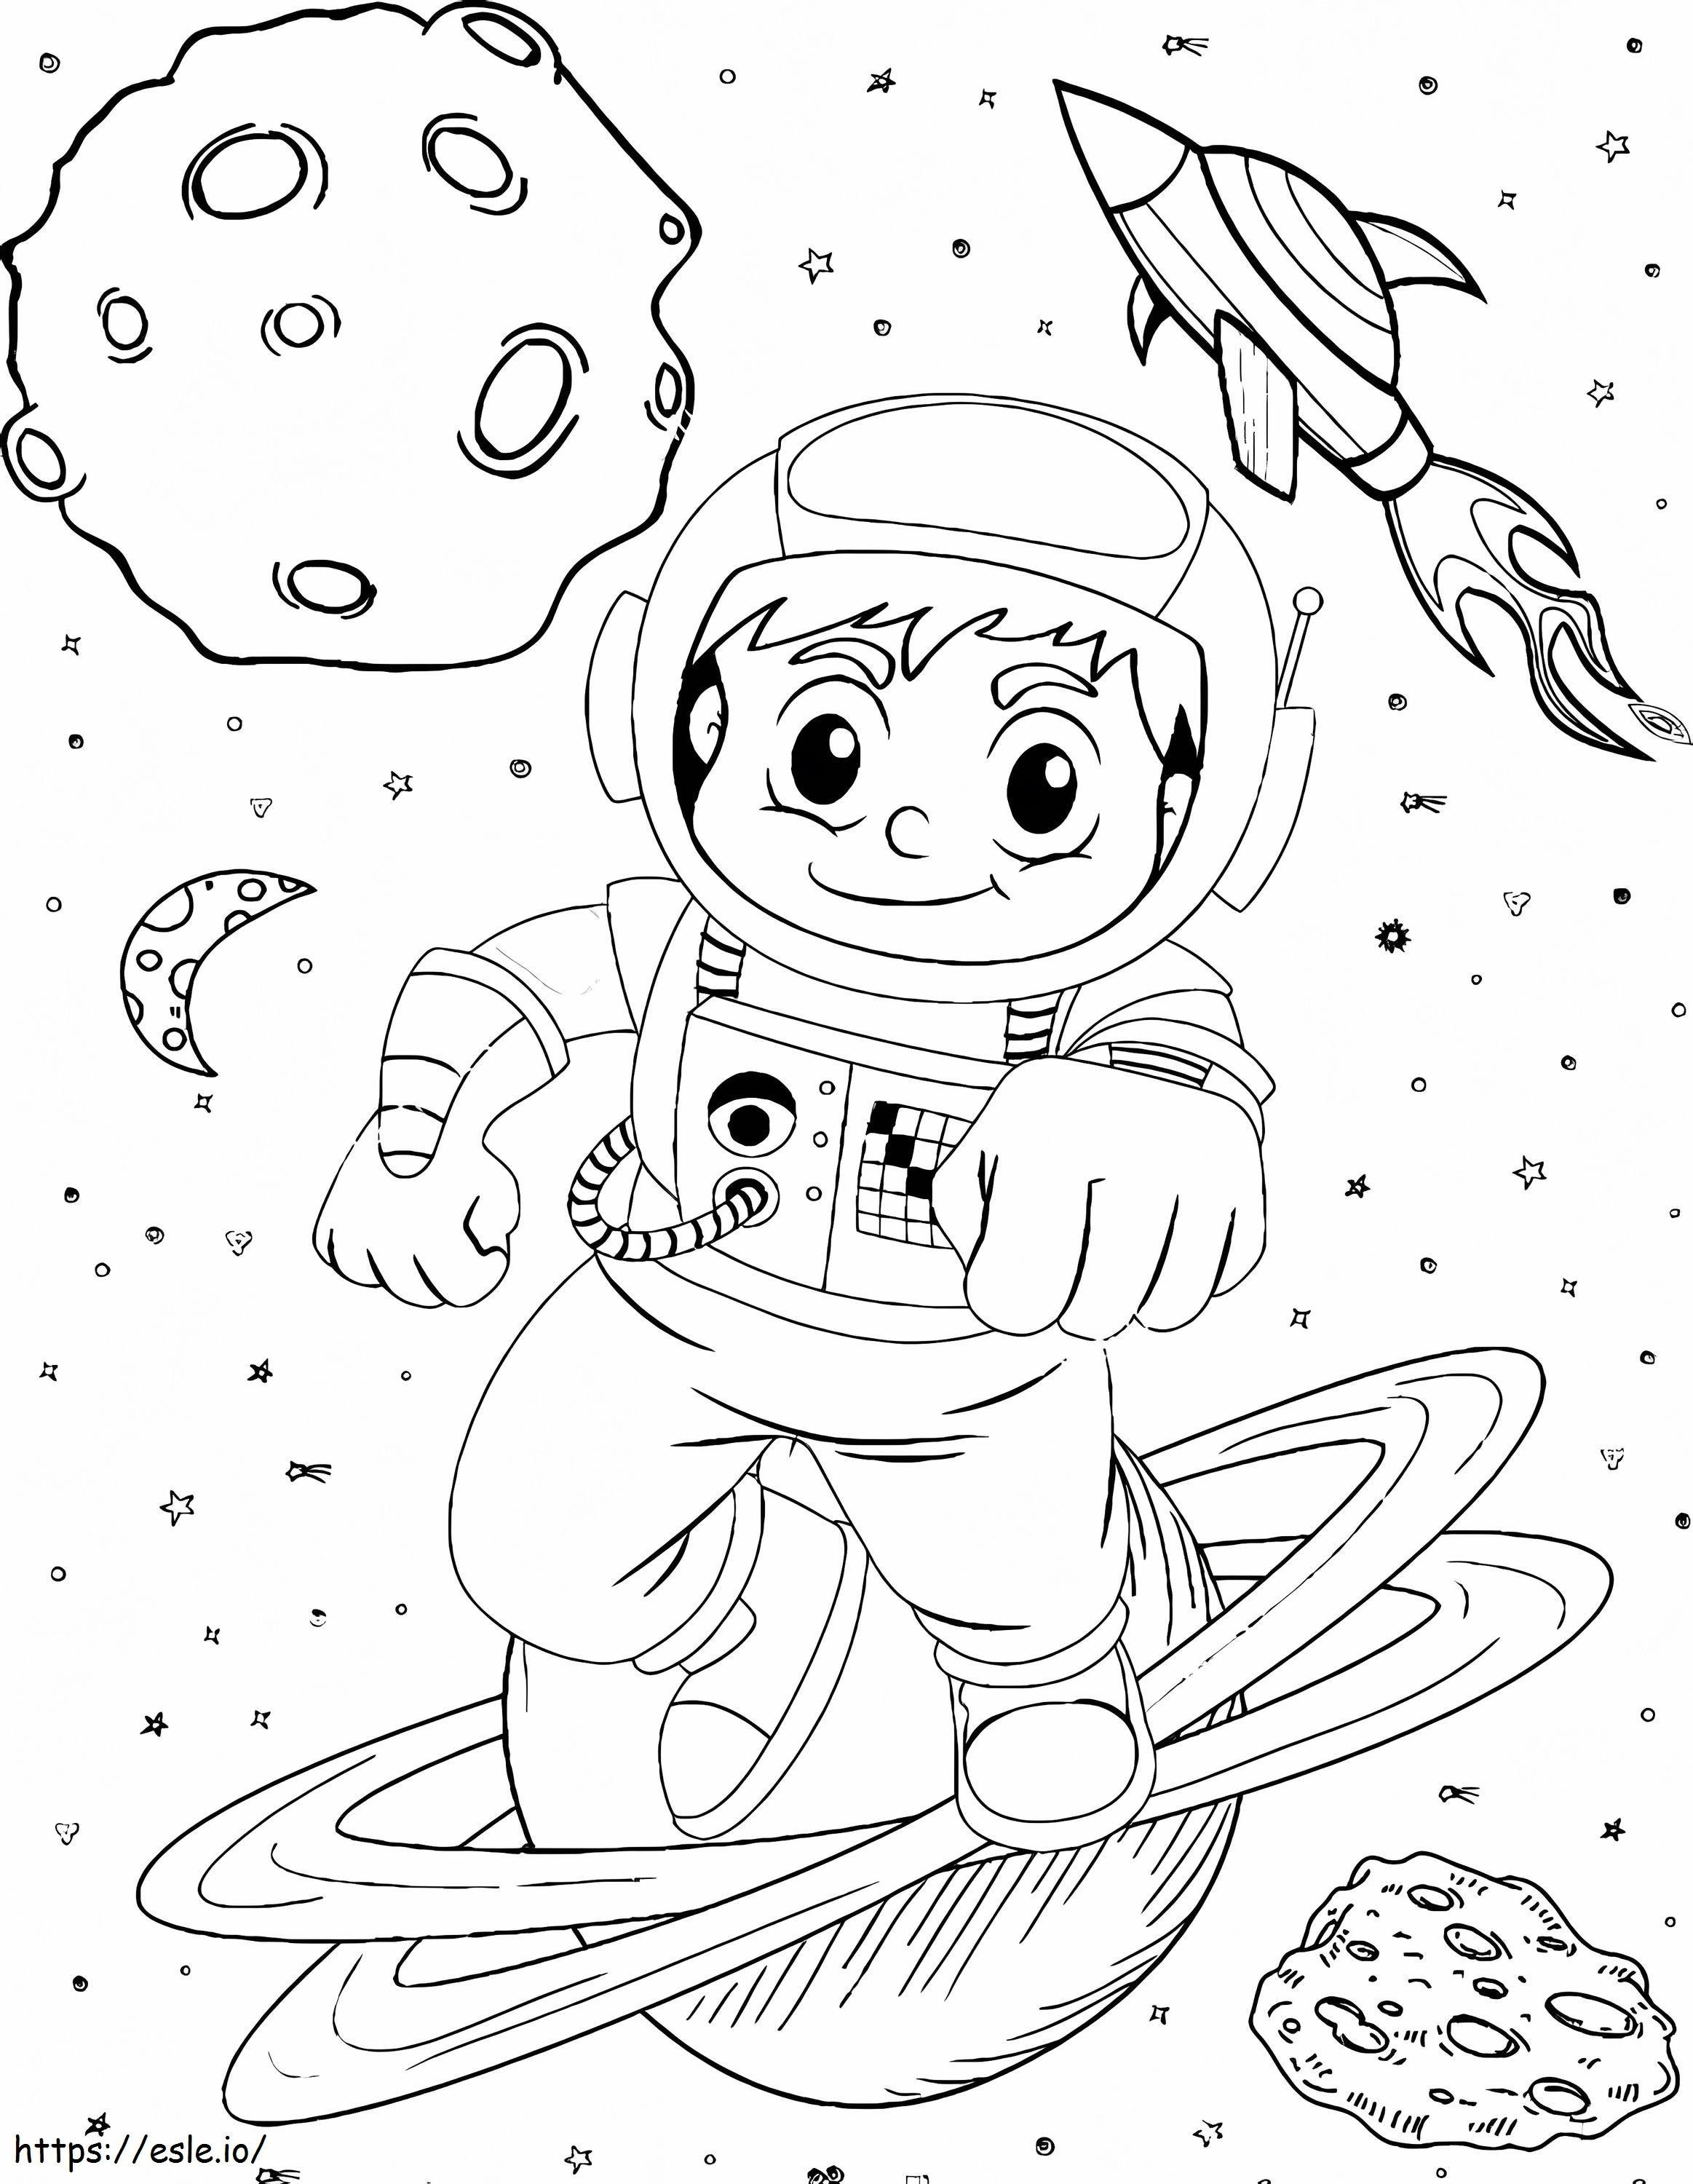 Coloriage Caricature d'astronaute à imprimer dessin